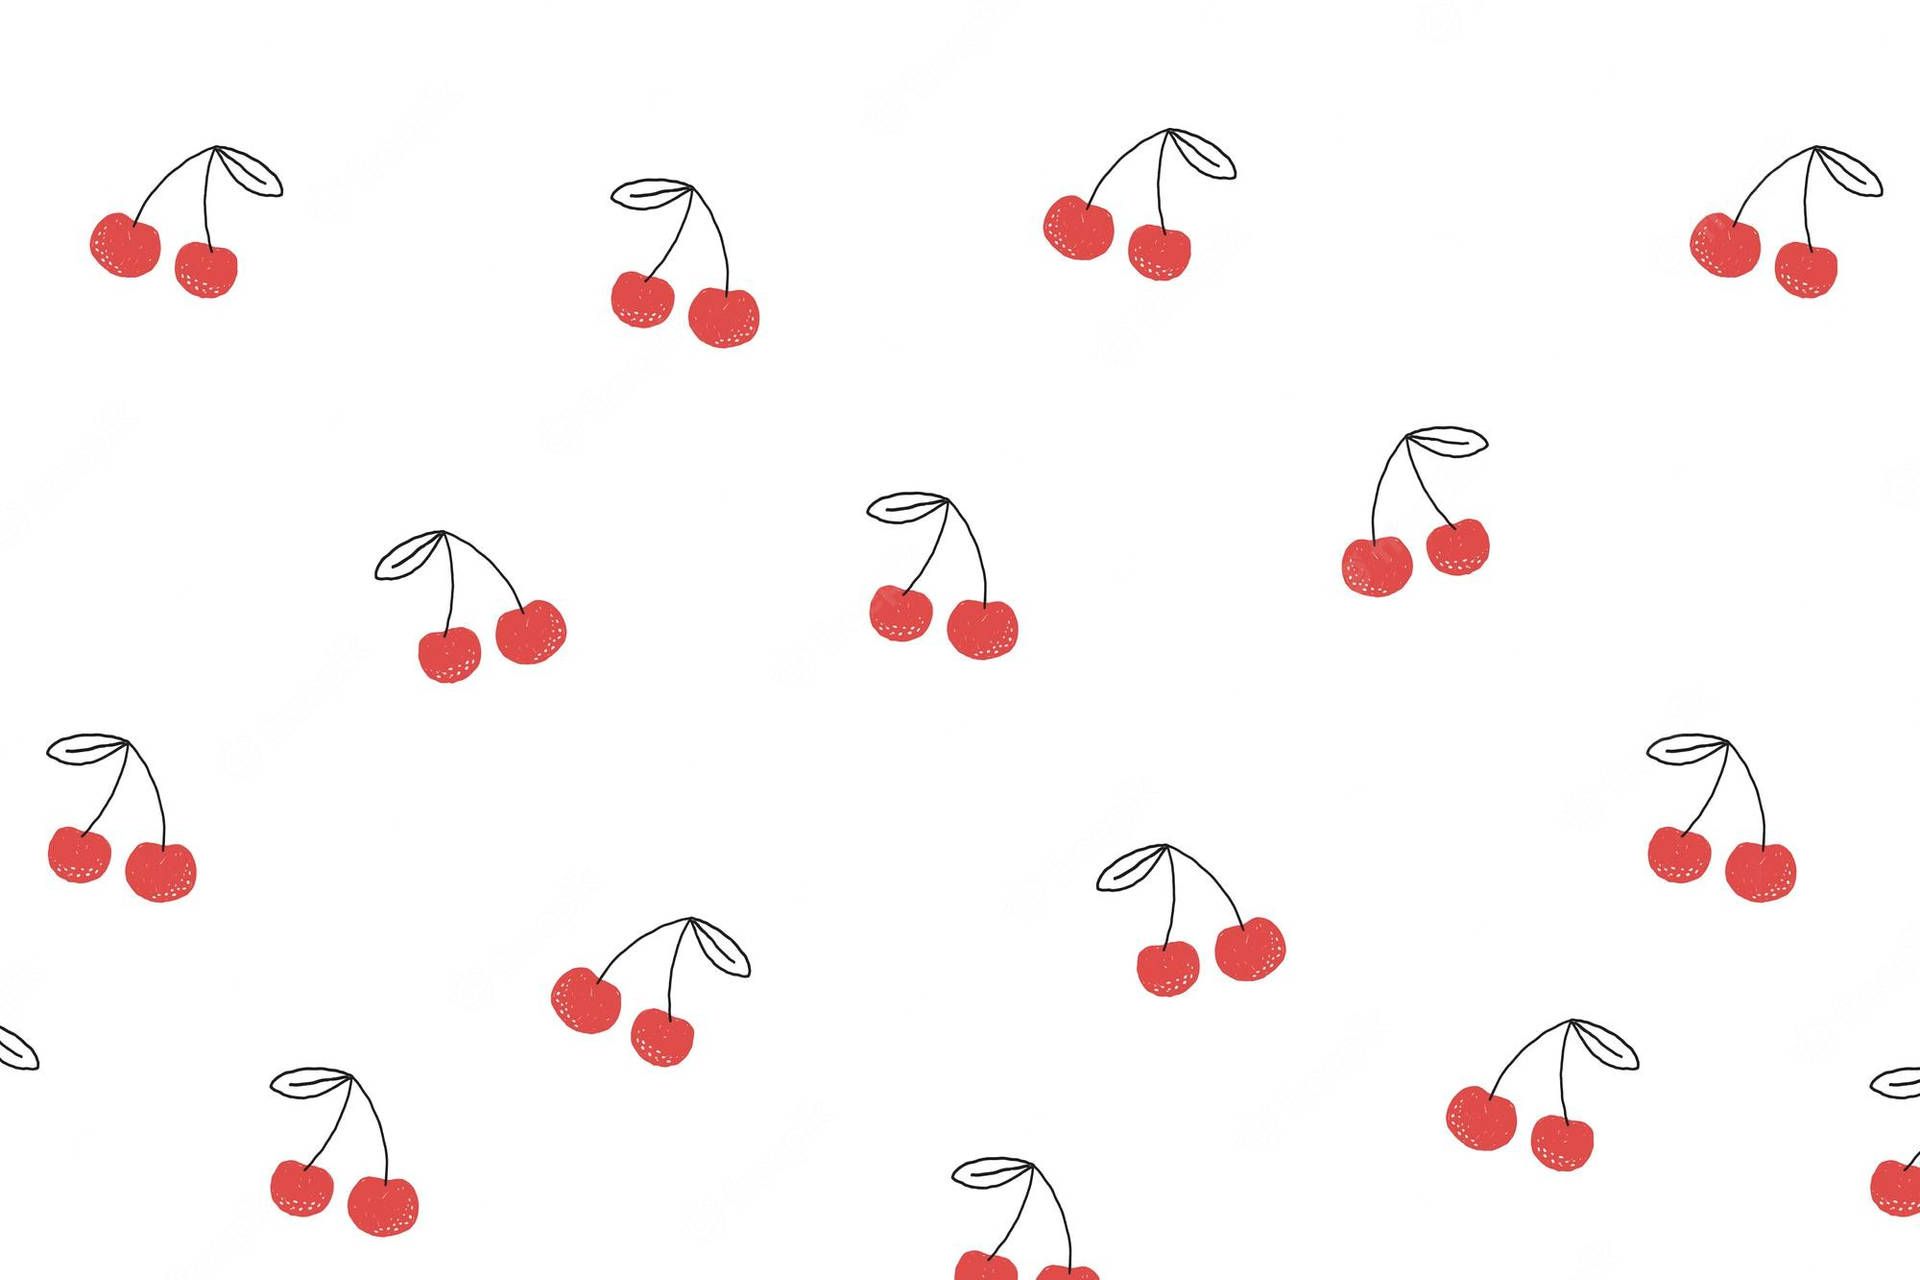 Free Cute Cherry Aesthetic Wallpaper Downloads, Cute Cherry Aesthetic Wallpaper for FREE